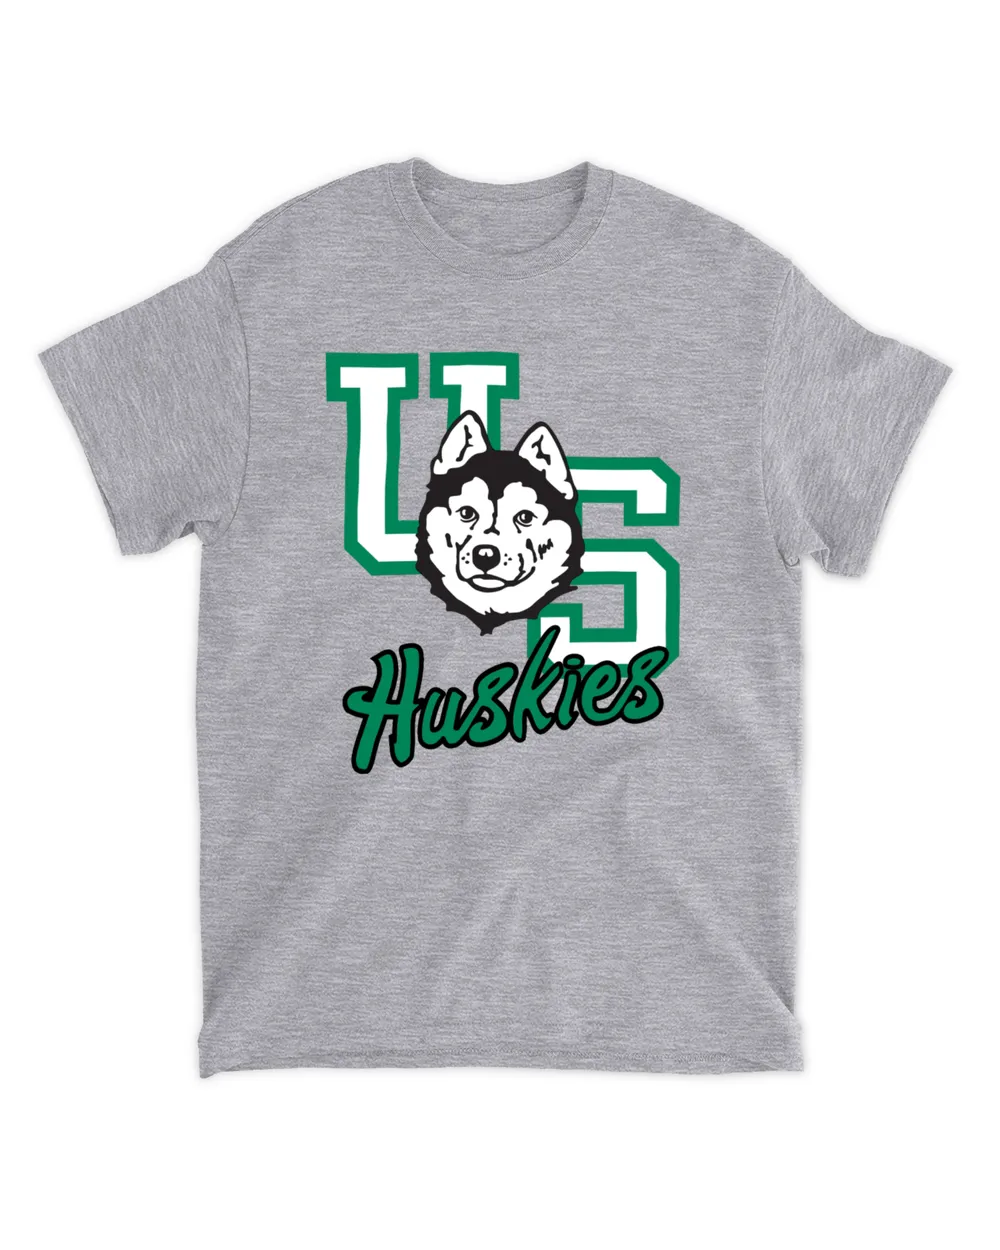 U Of S Huskies T-Shirt Unisex Standard T-Shirt sport-grey 